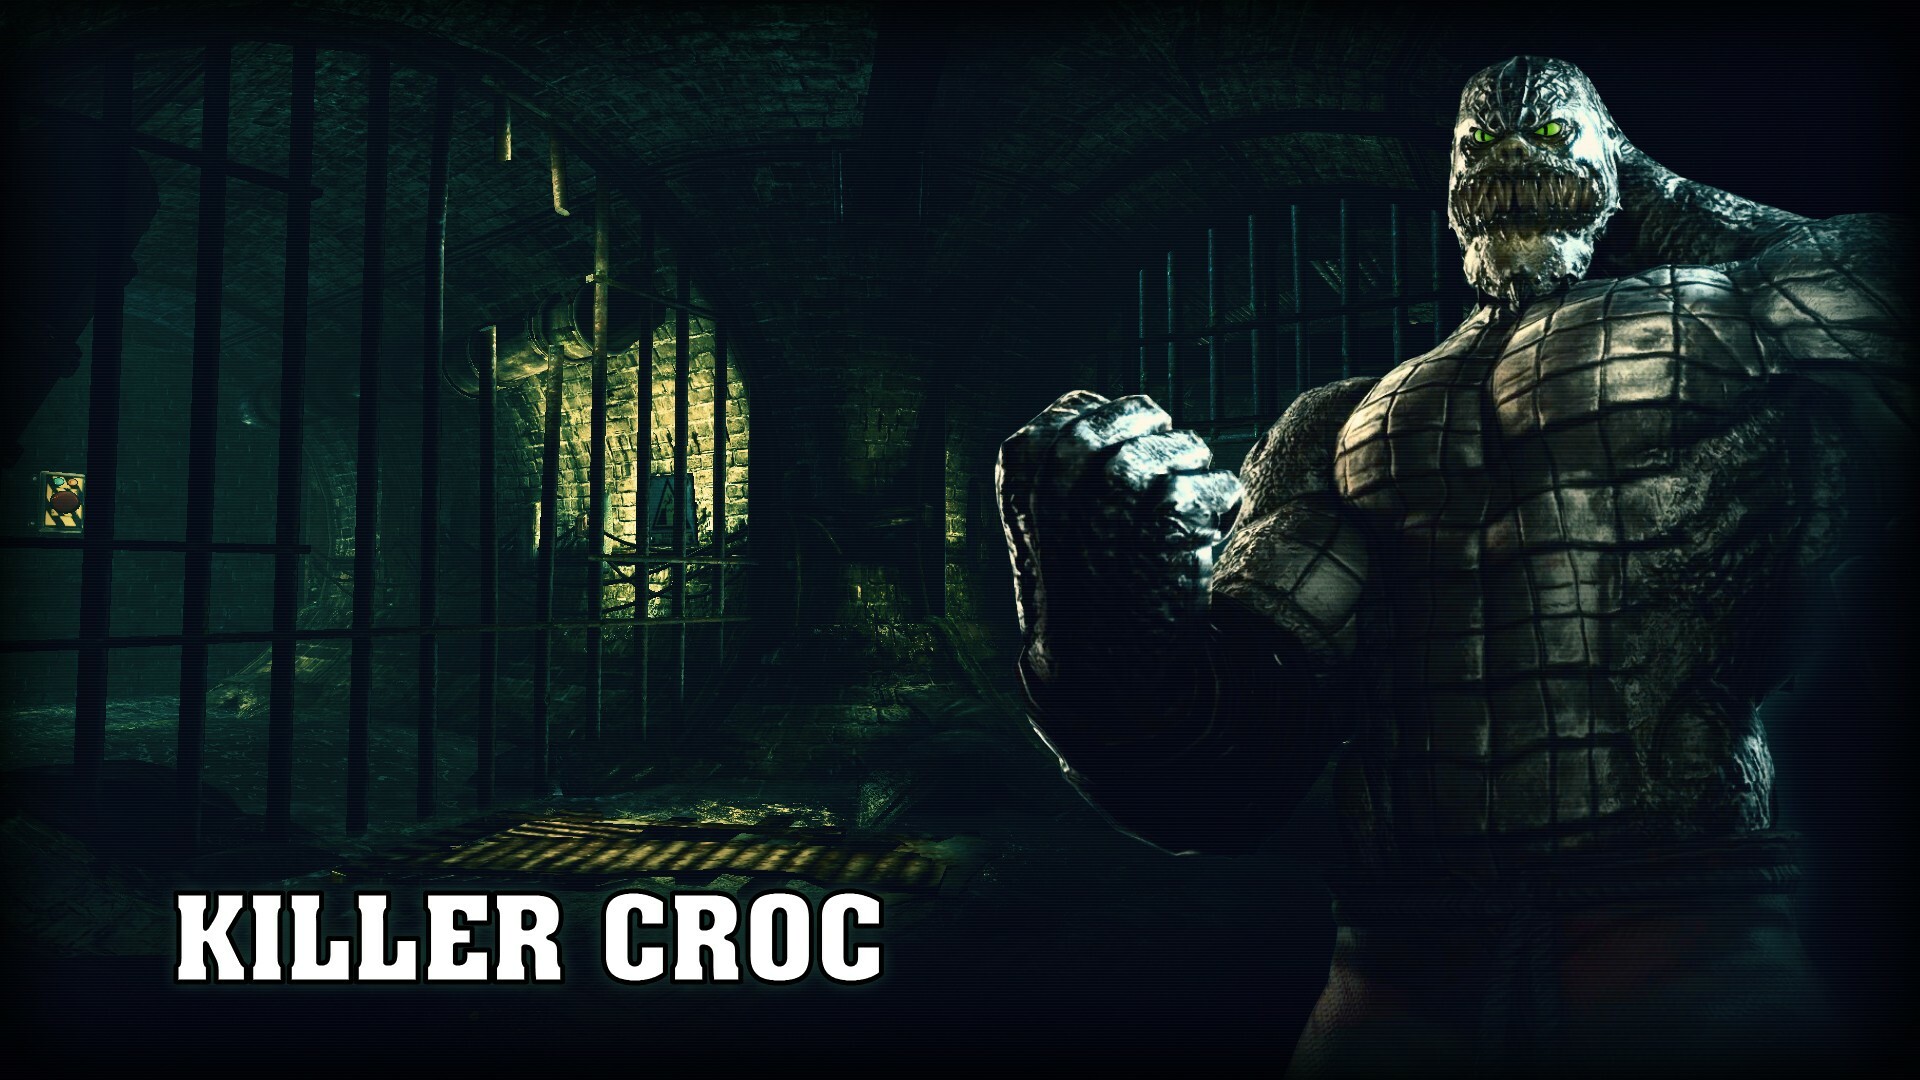 Killer Croc: DC character with reptilian traits, American comic books. 1920x1080 Full HD Wallpaper.